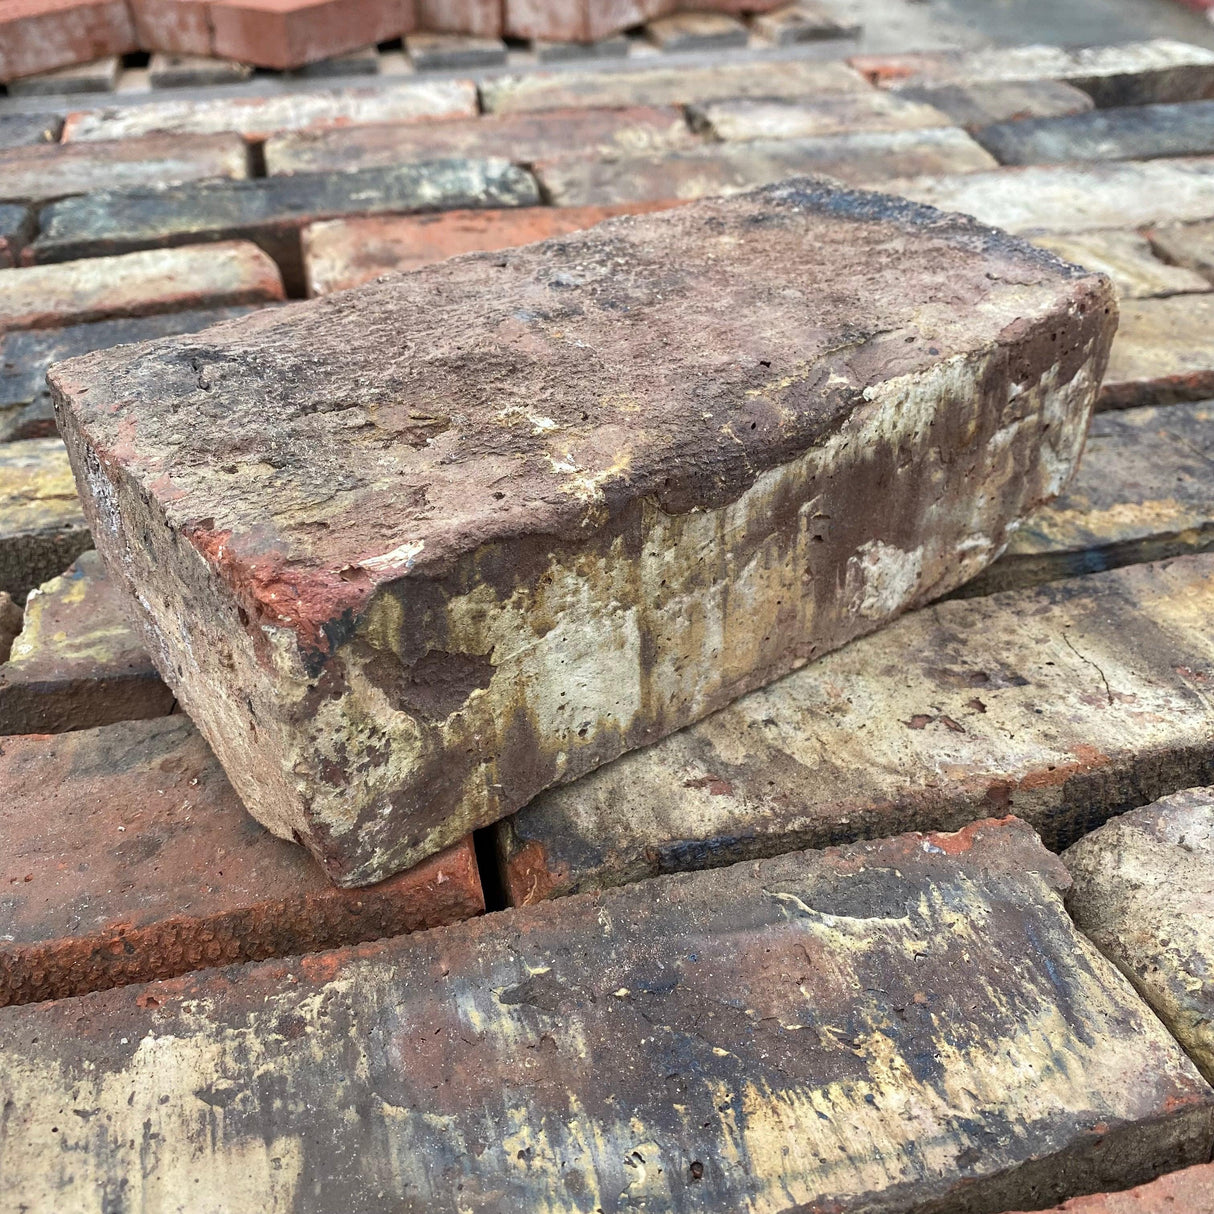 York Handmade Clamp Imperial Brick - Reclaimed Brick Company